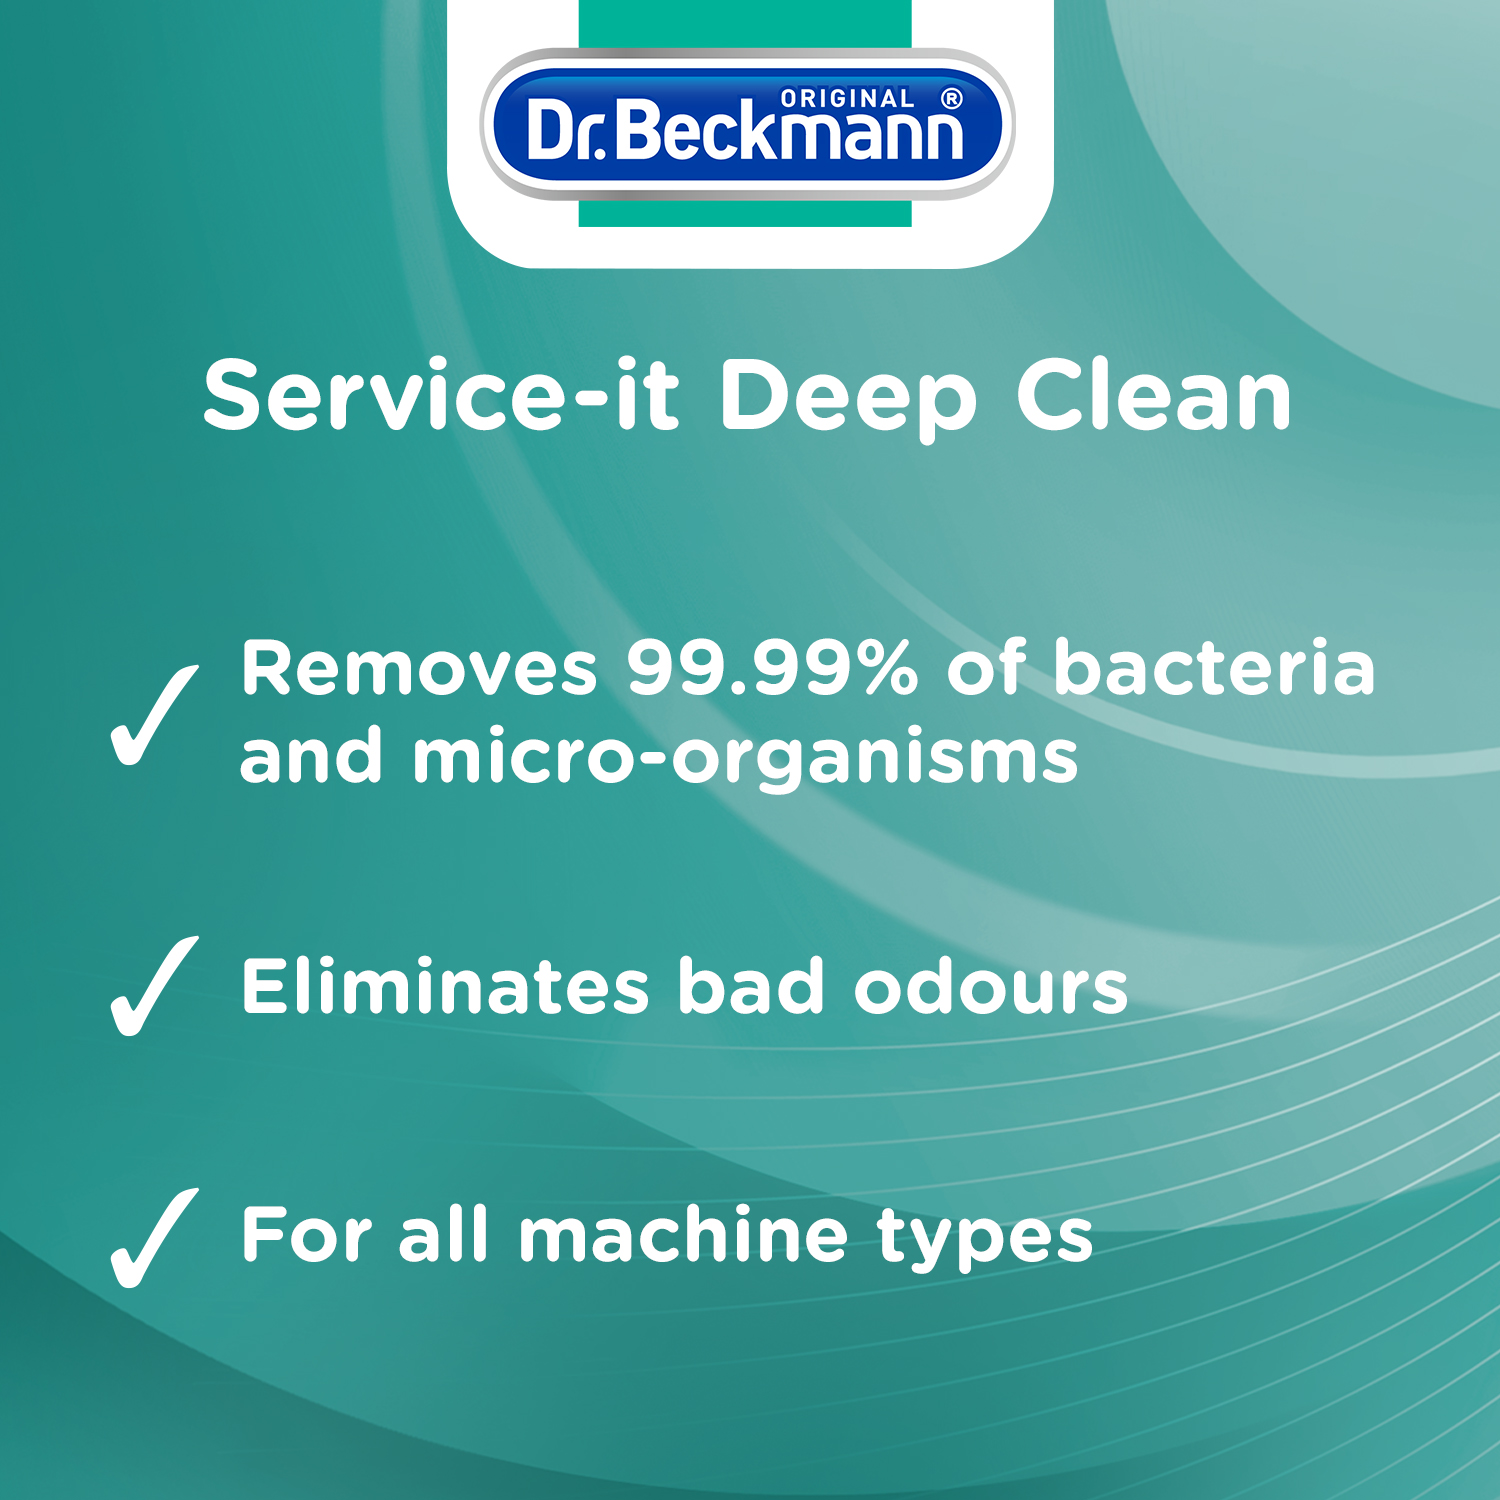 Delta Pronatura Ag Dr Beckmann Washing Machine Cleaner 250 ml